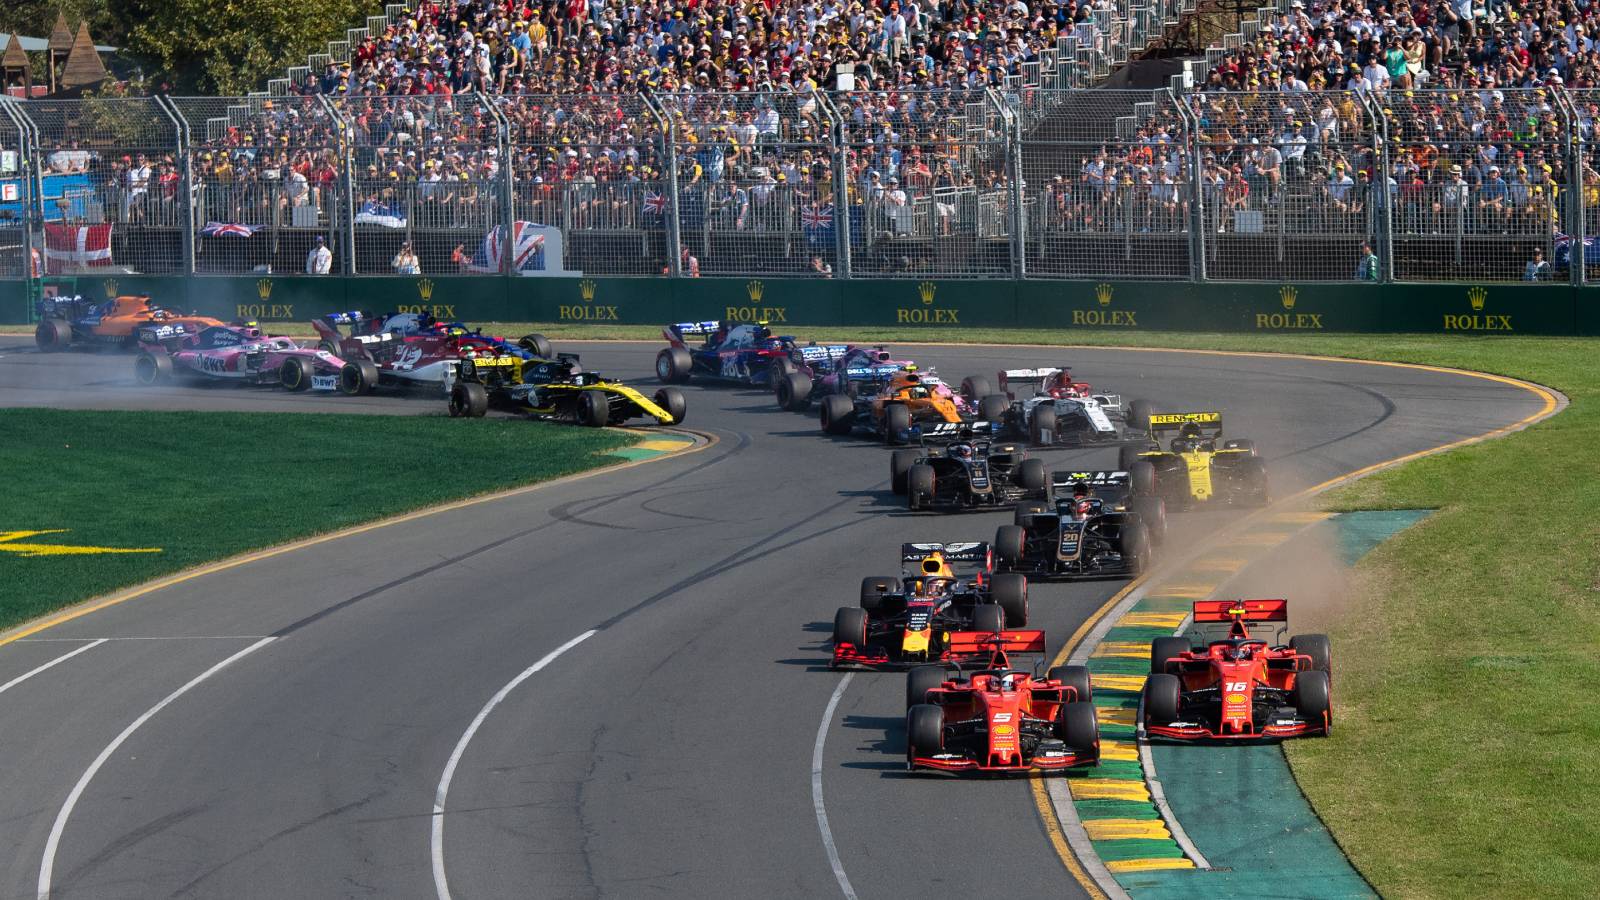 Ferraris battle in the Australian Grand Prix. Melbourne March 2019.